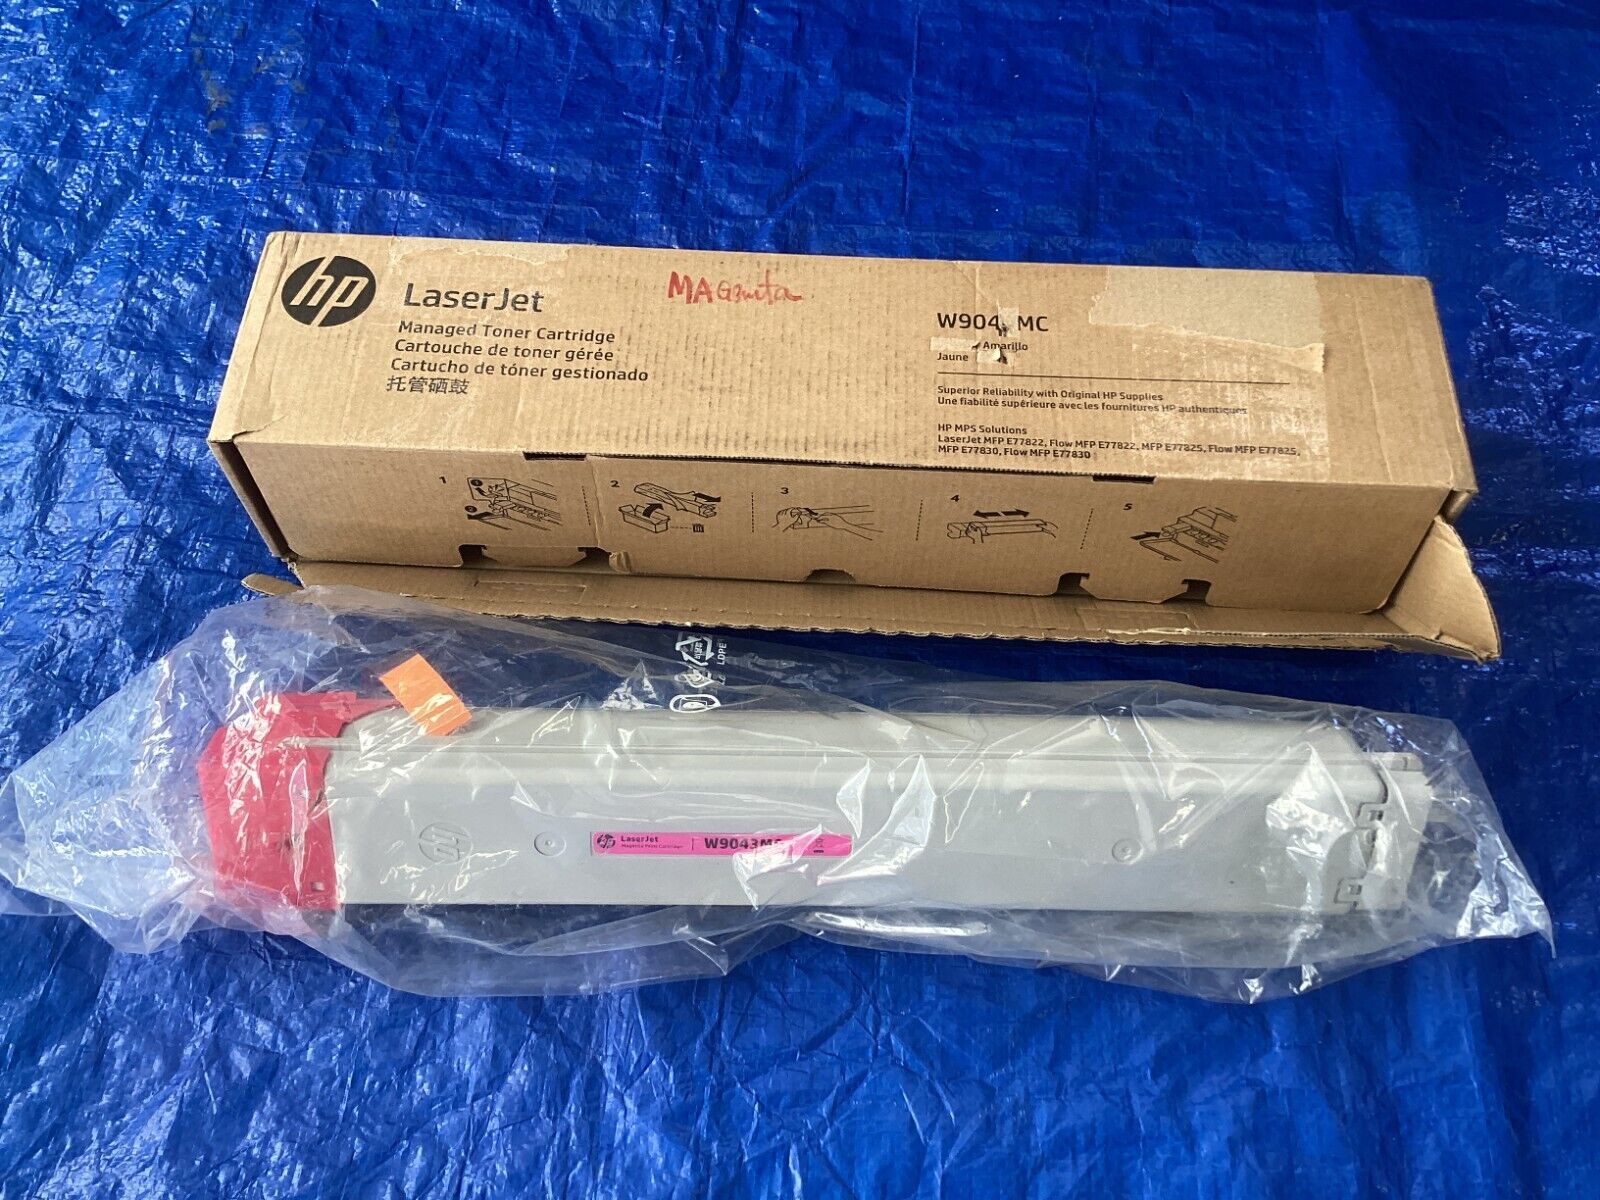 NEW HP LaserJet W9043MC Managed Print Cartridge, Magenta ( Opened Box)